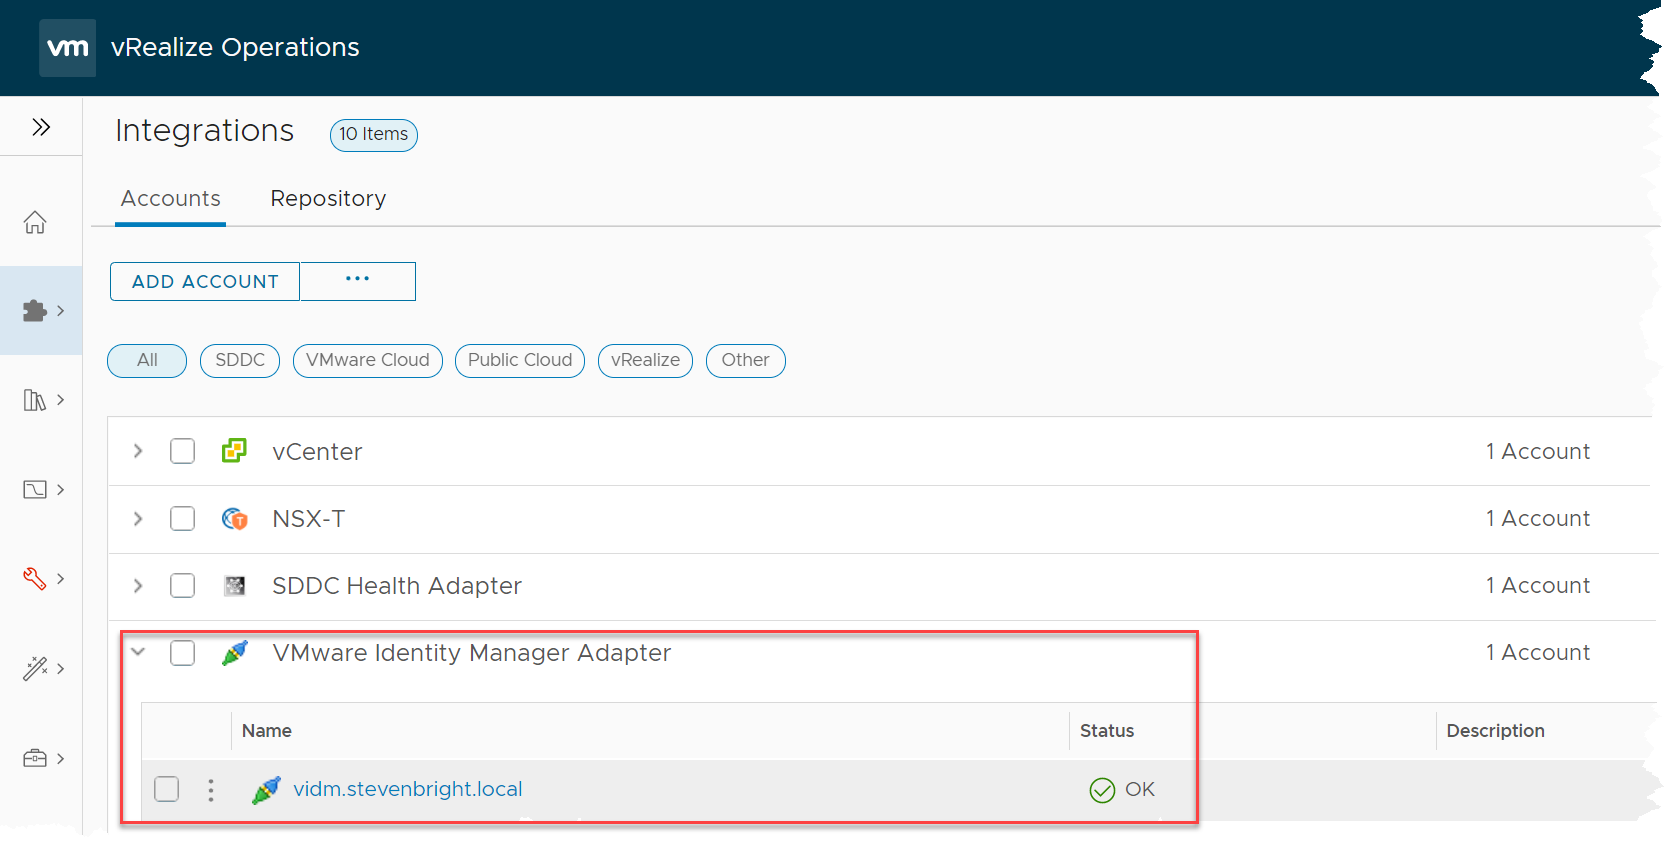 VMware vRealize Operations - Integrations - VMware Identity Manager Adapter - Green OK Status